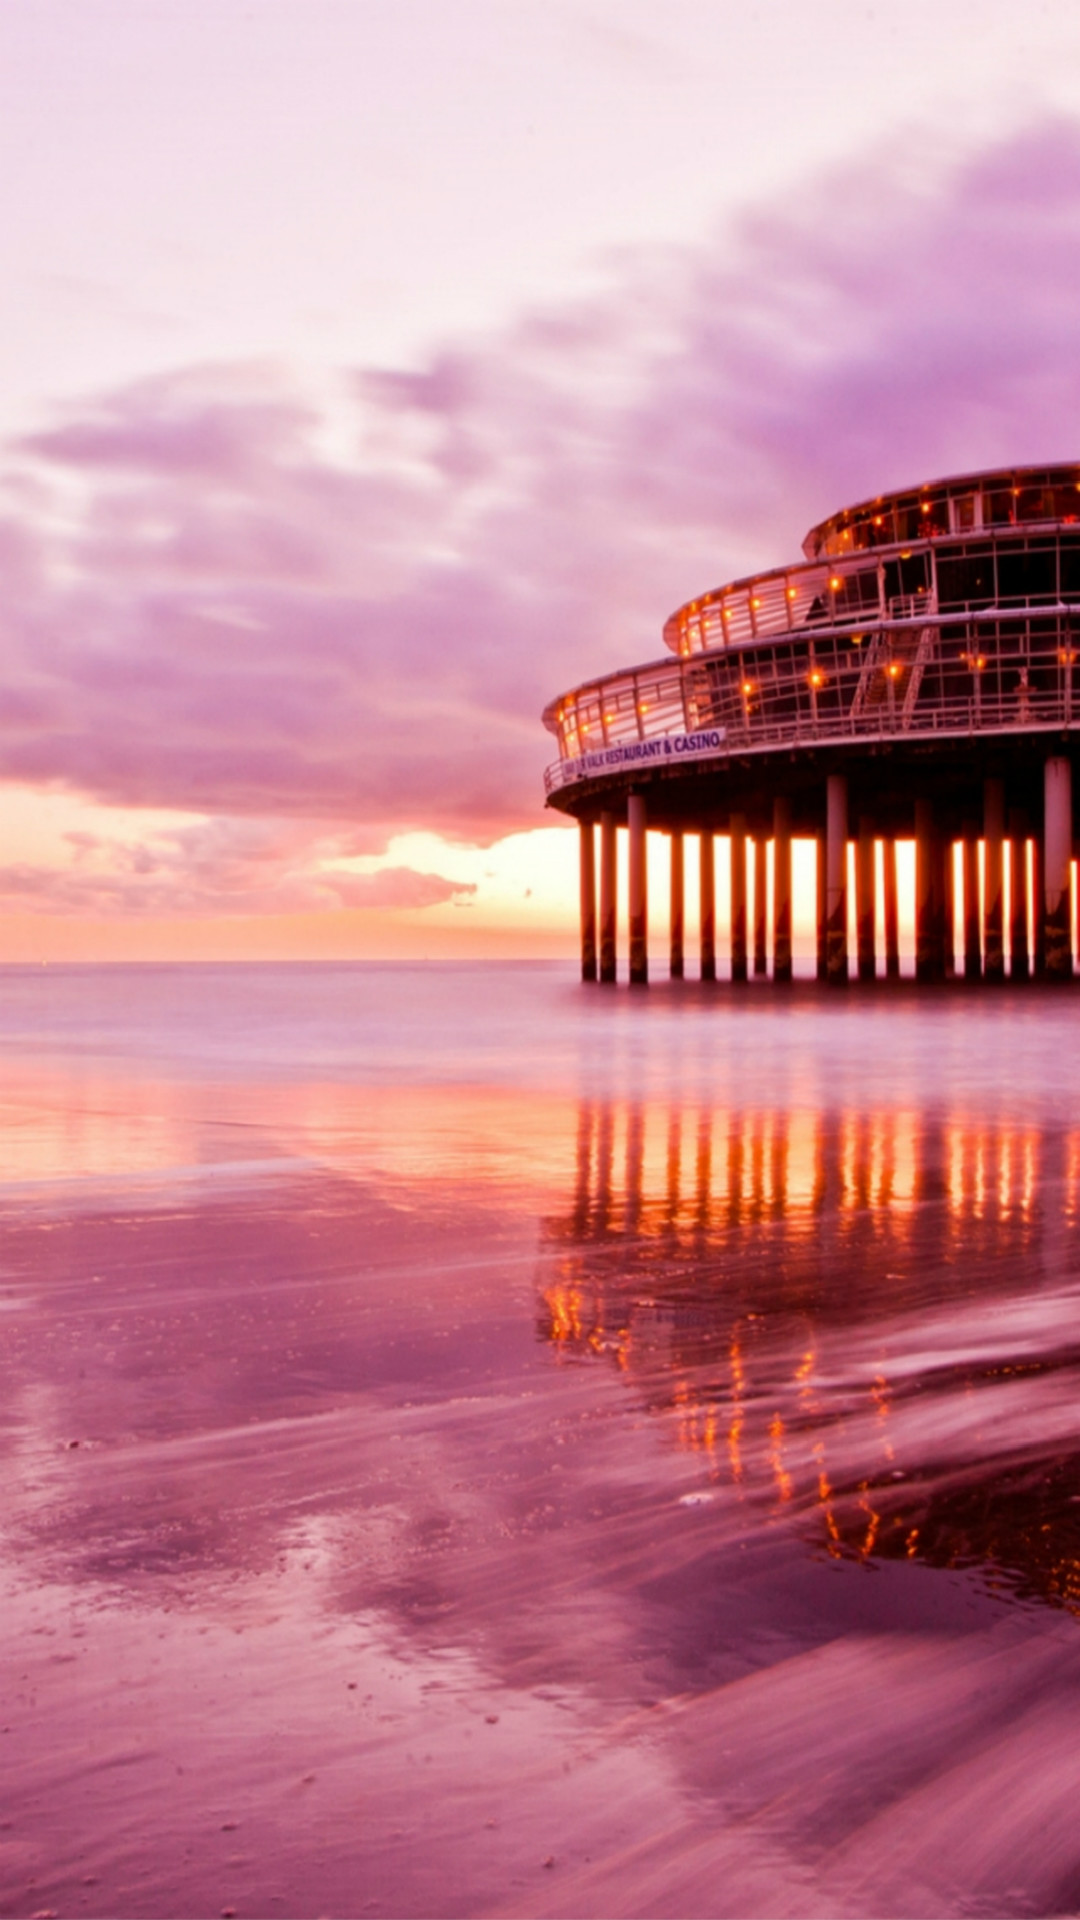 1080x1920 Spectacular Ocean Sunset Beach Architecture Landscape #iPhone #6 #wallpaper